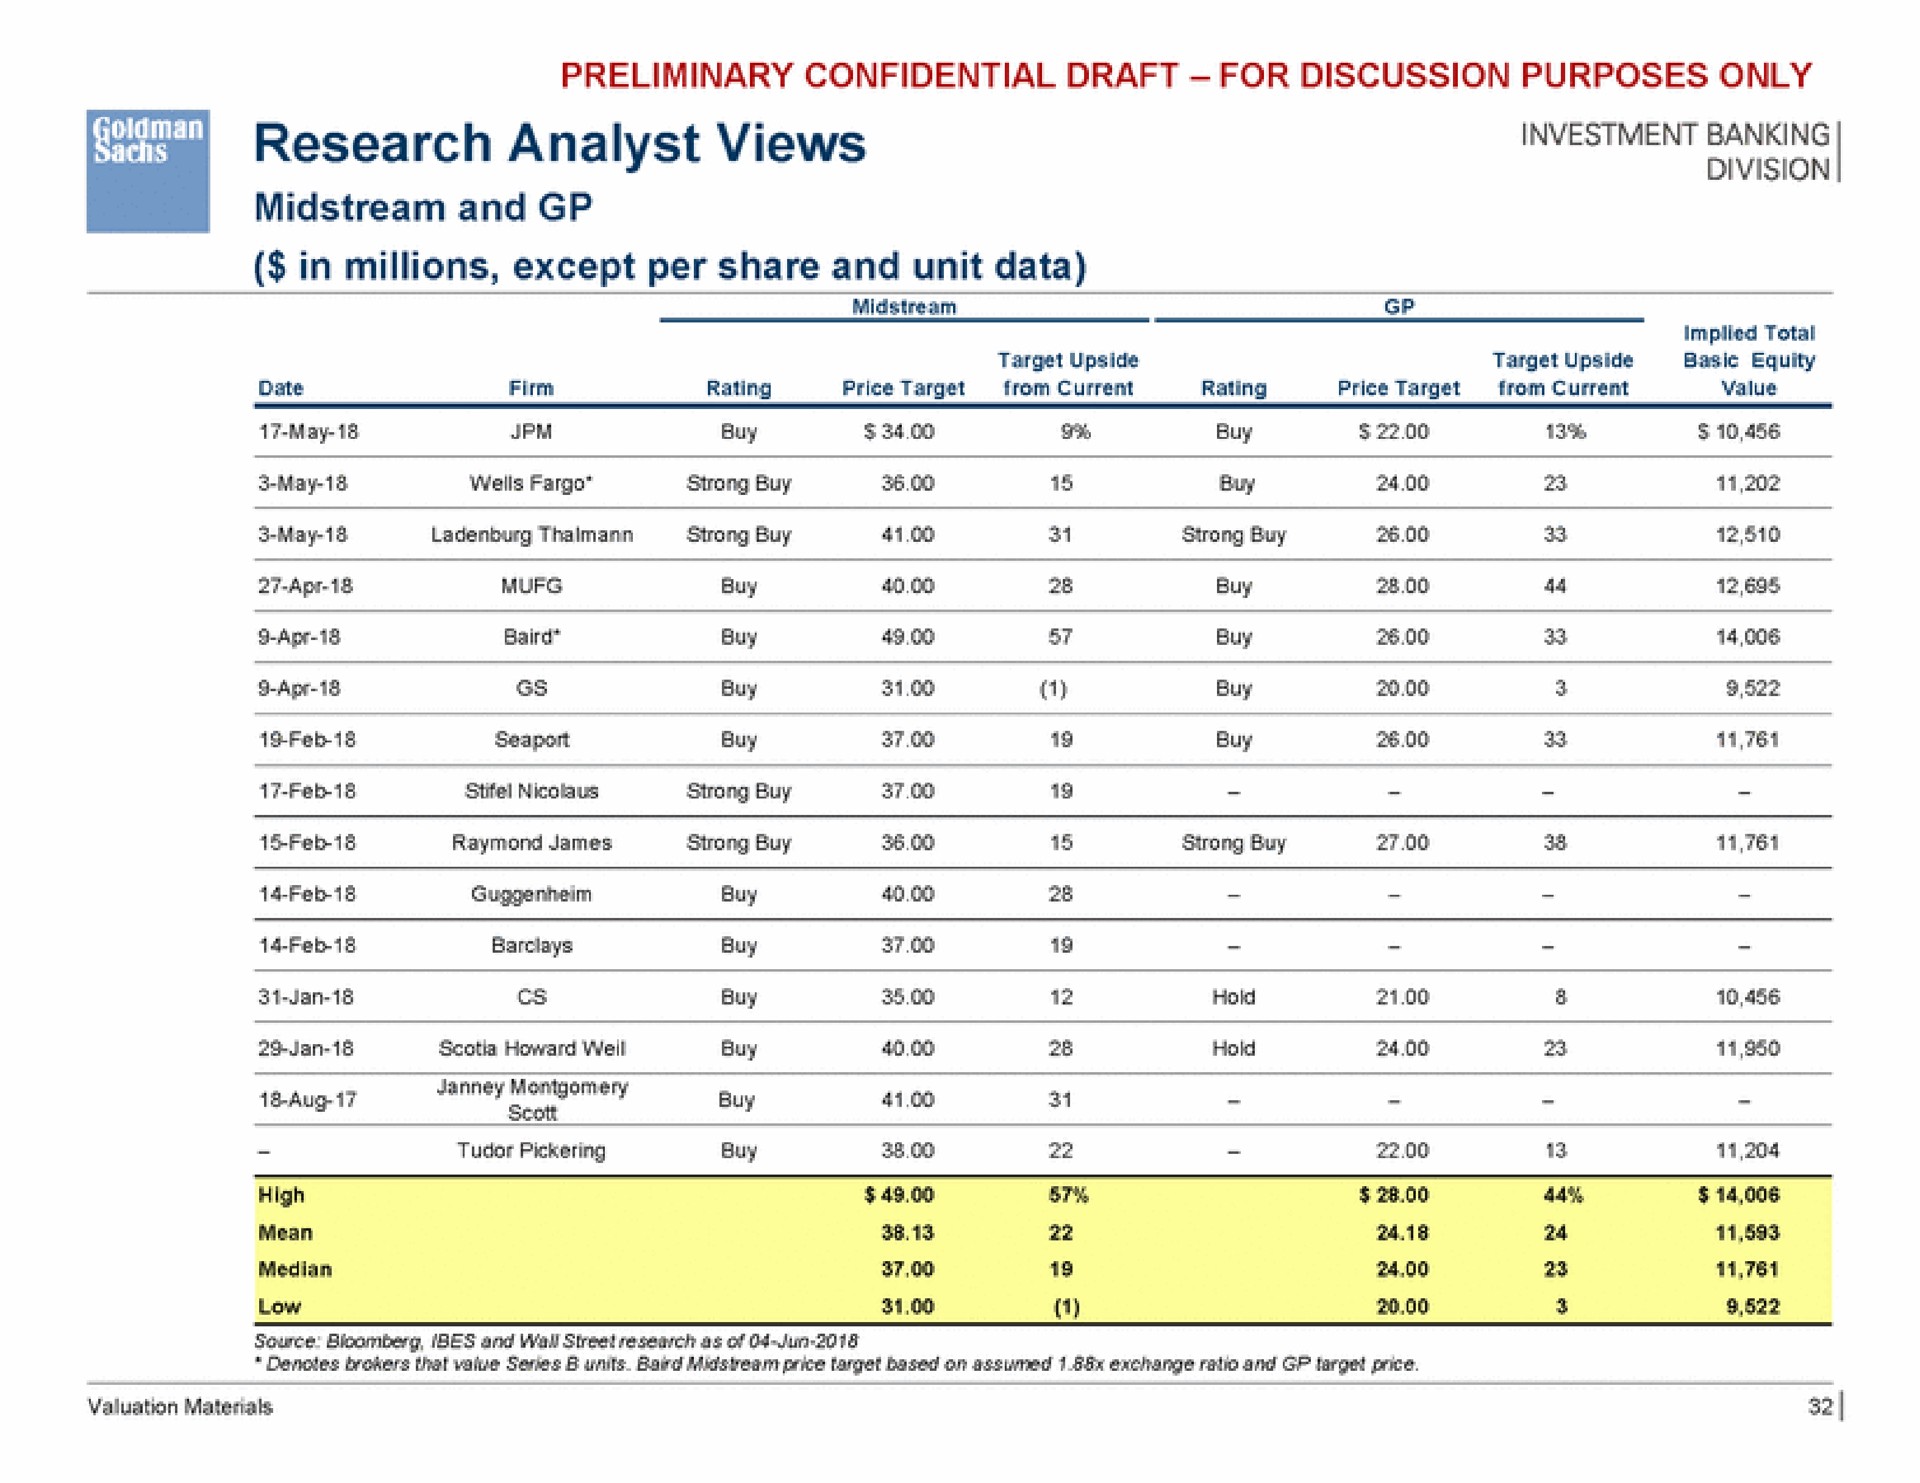 research analyst views | Goldman Sachs